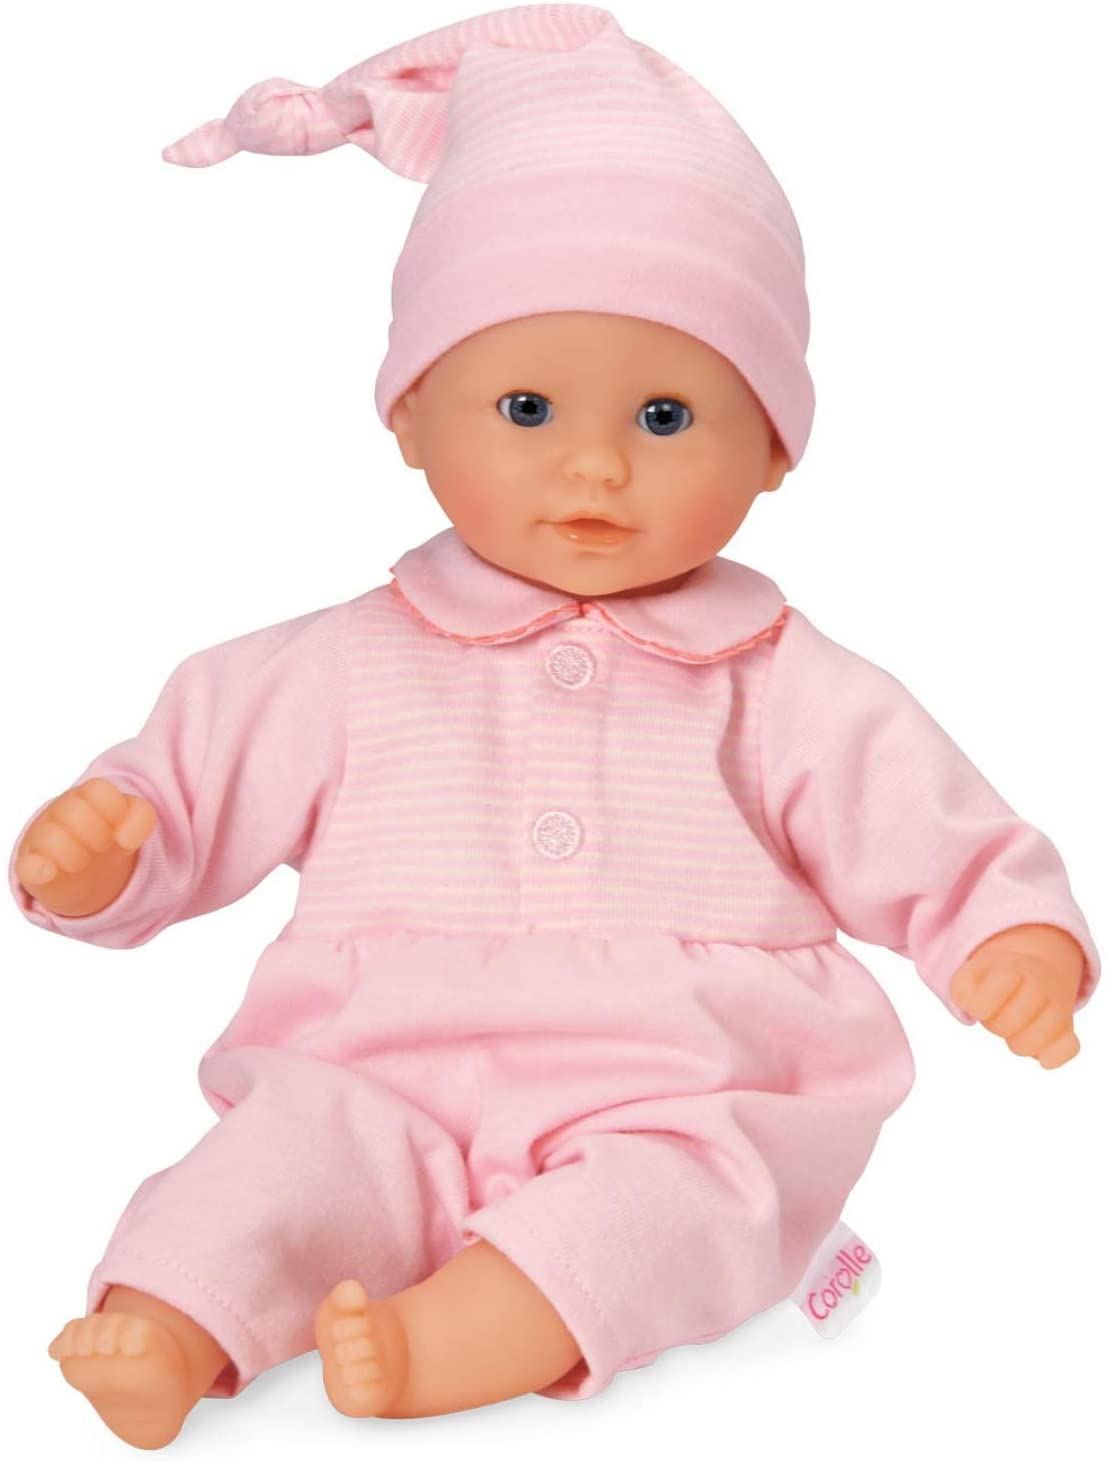 Mon Premier Poupon Bebe Calin - Charming Pastel - 12" Baby Doll by Corolle